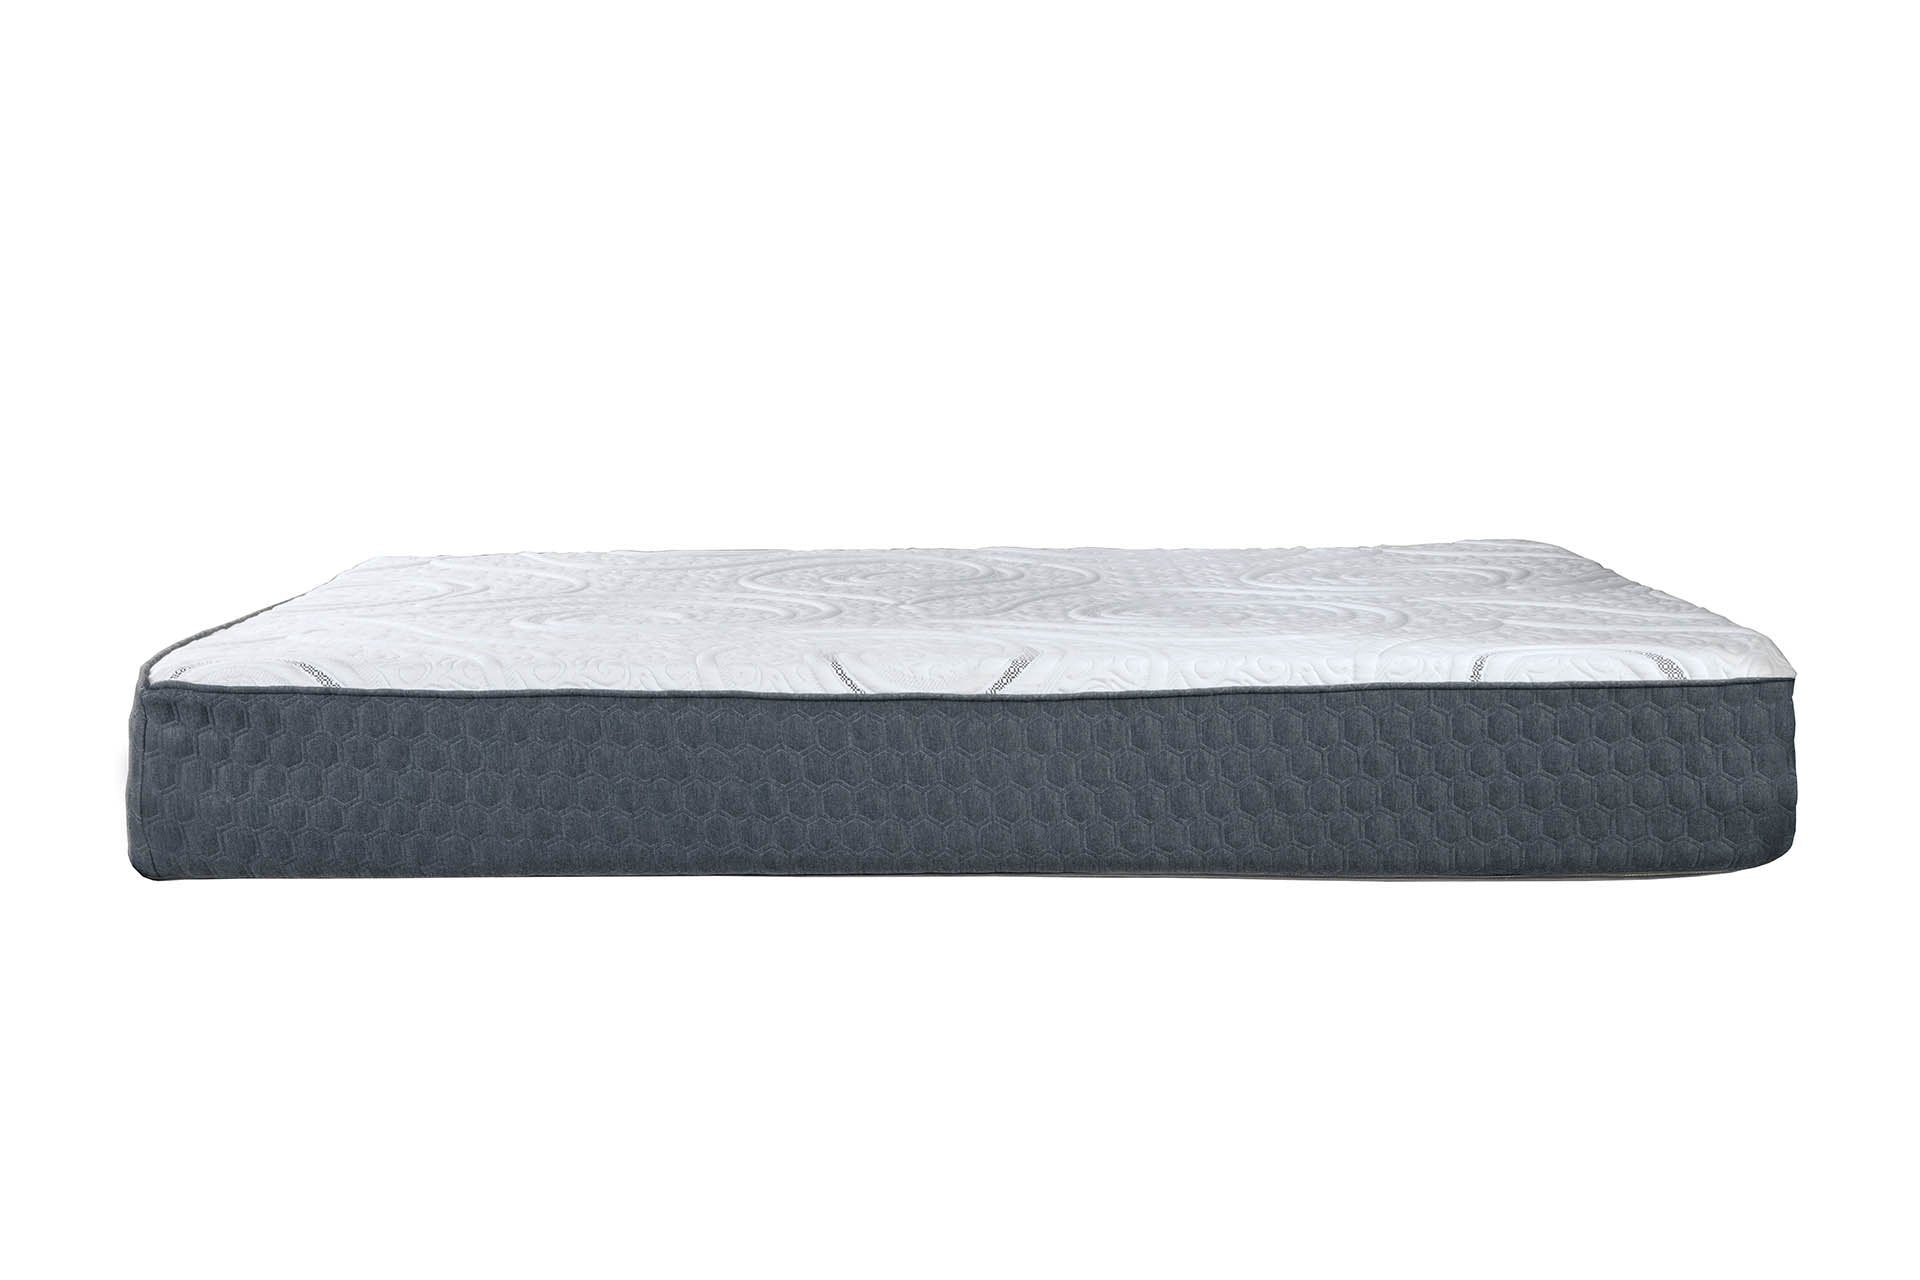 Side view of PremaSleep Supreme Comfort Plush mattress